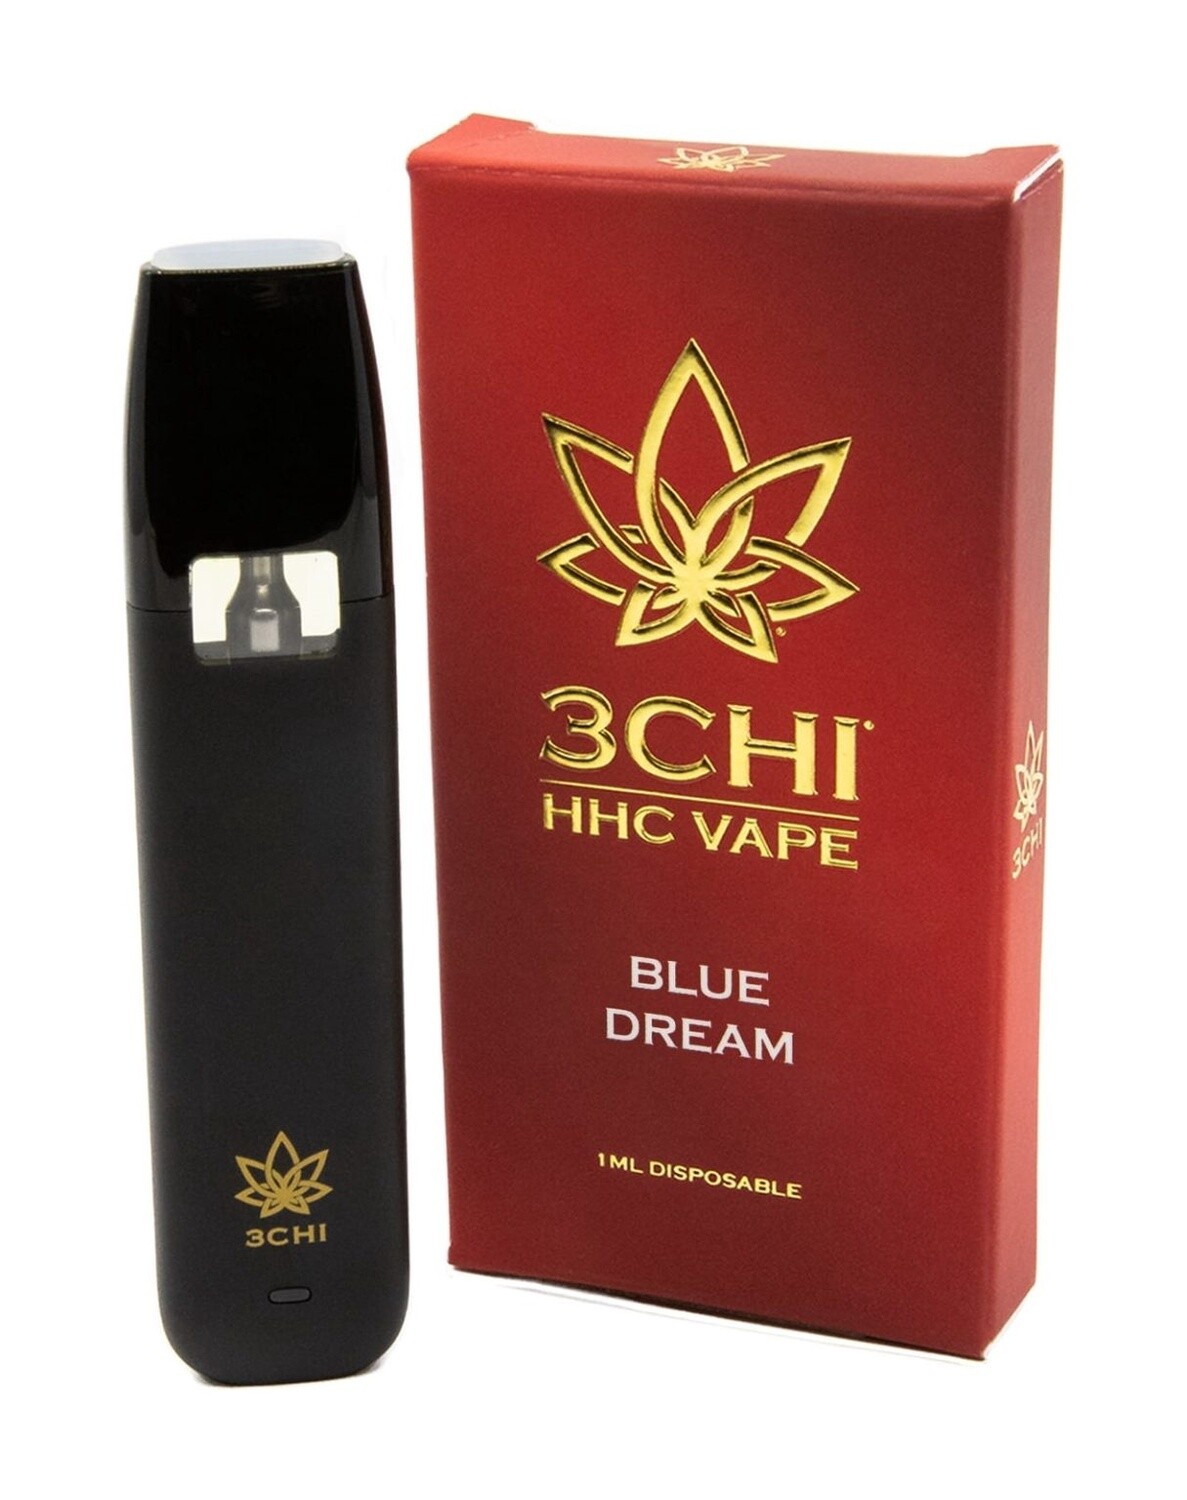 3CHI HHC Blue Dream Disposable 1g